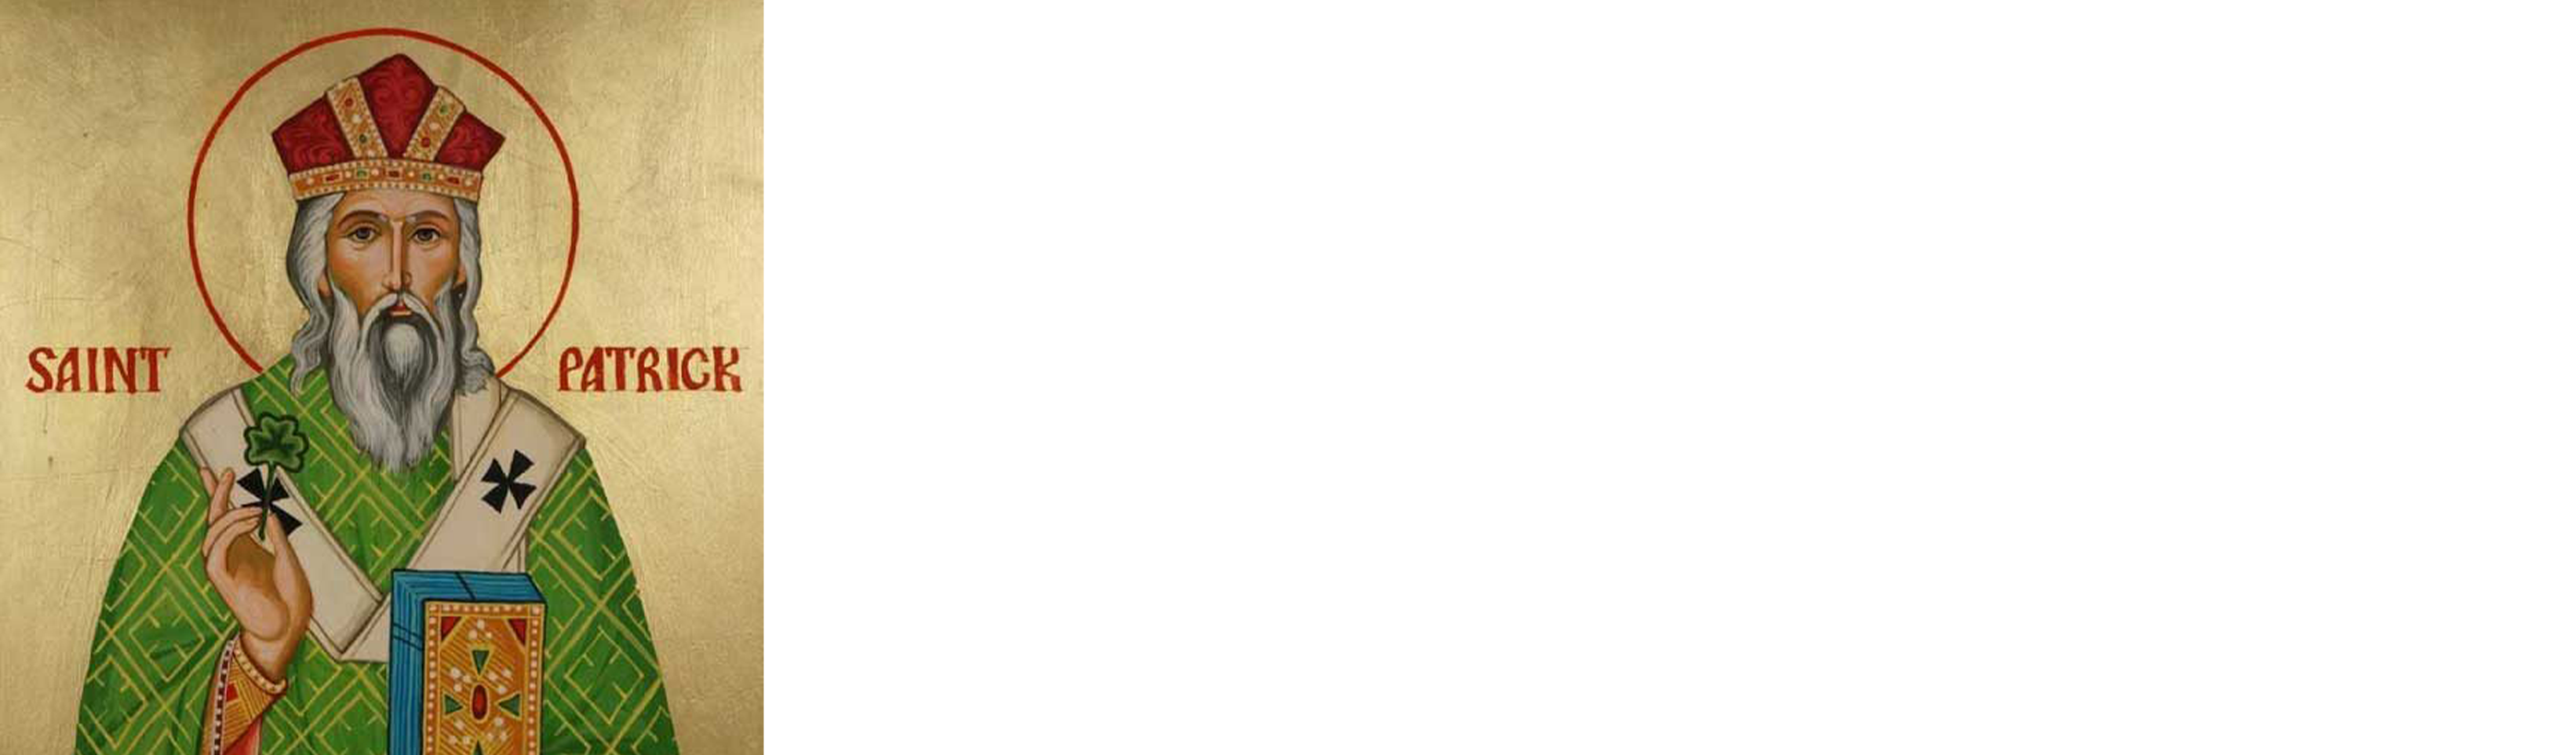 St Patrick's Catholic Church La Rochelle